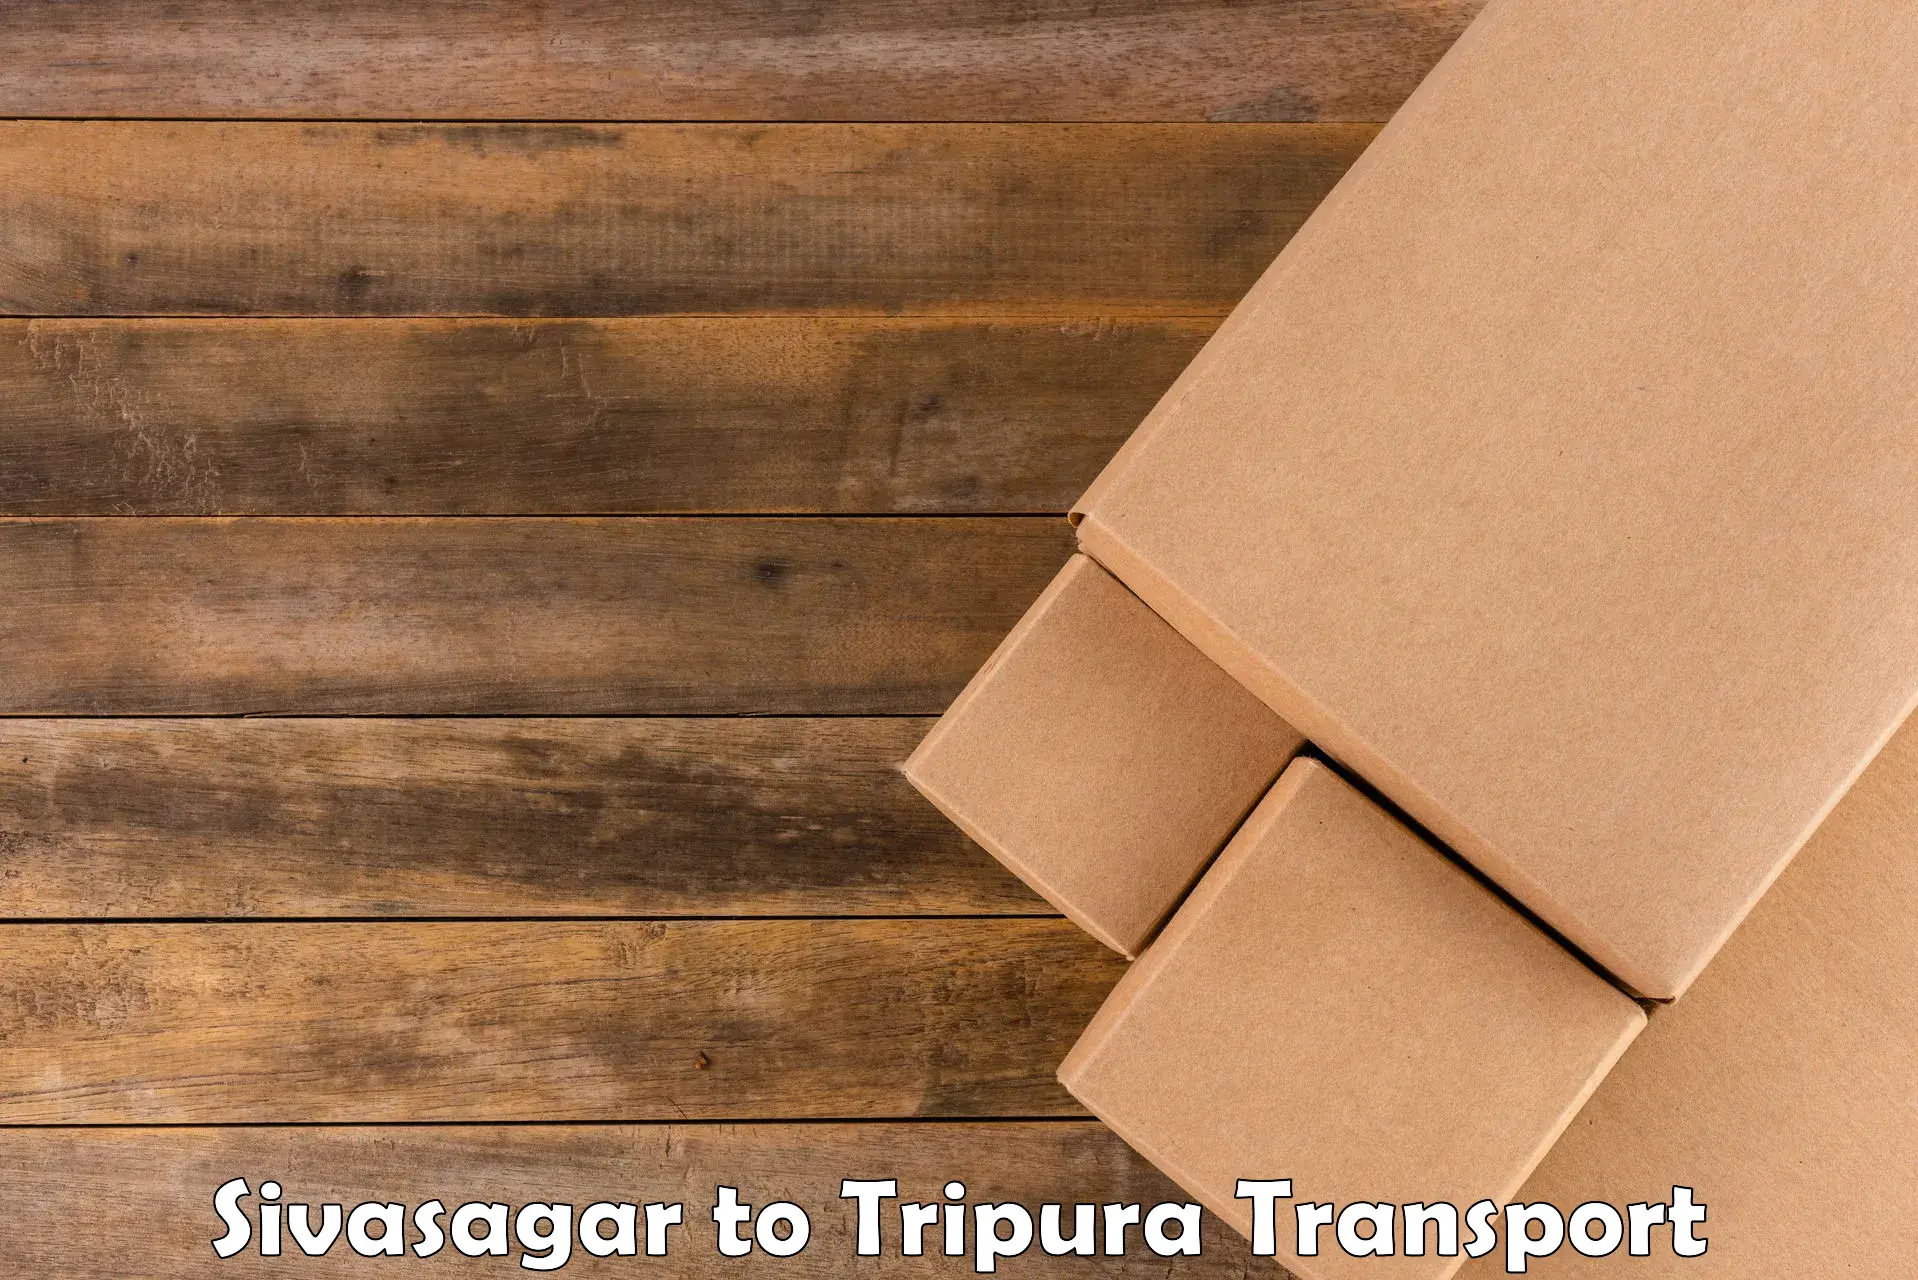 Sending bike to another city Sivasagar to Tripura